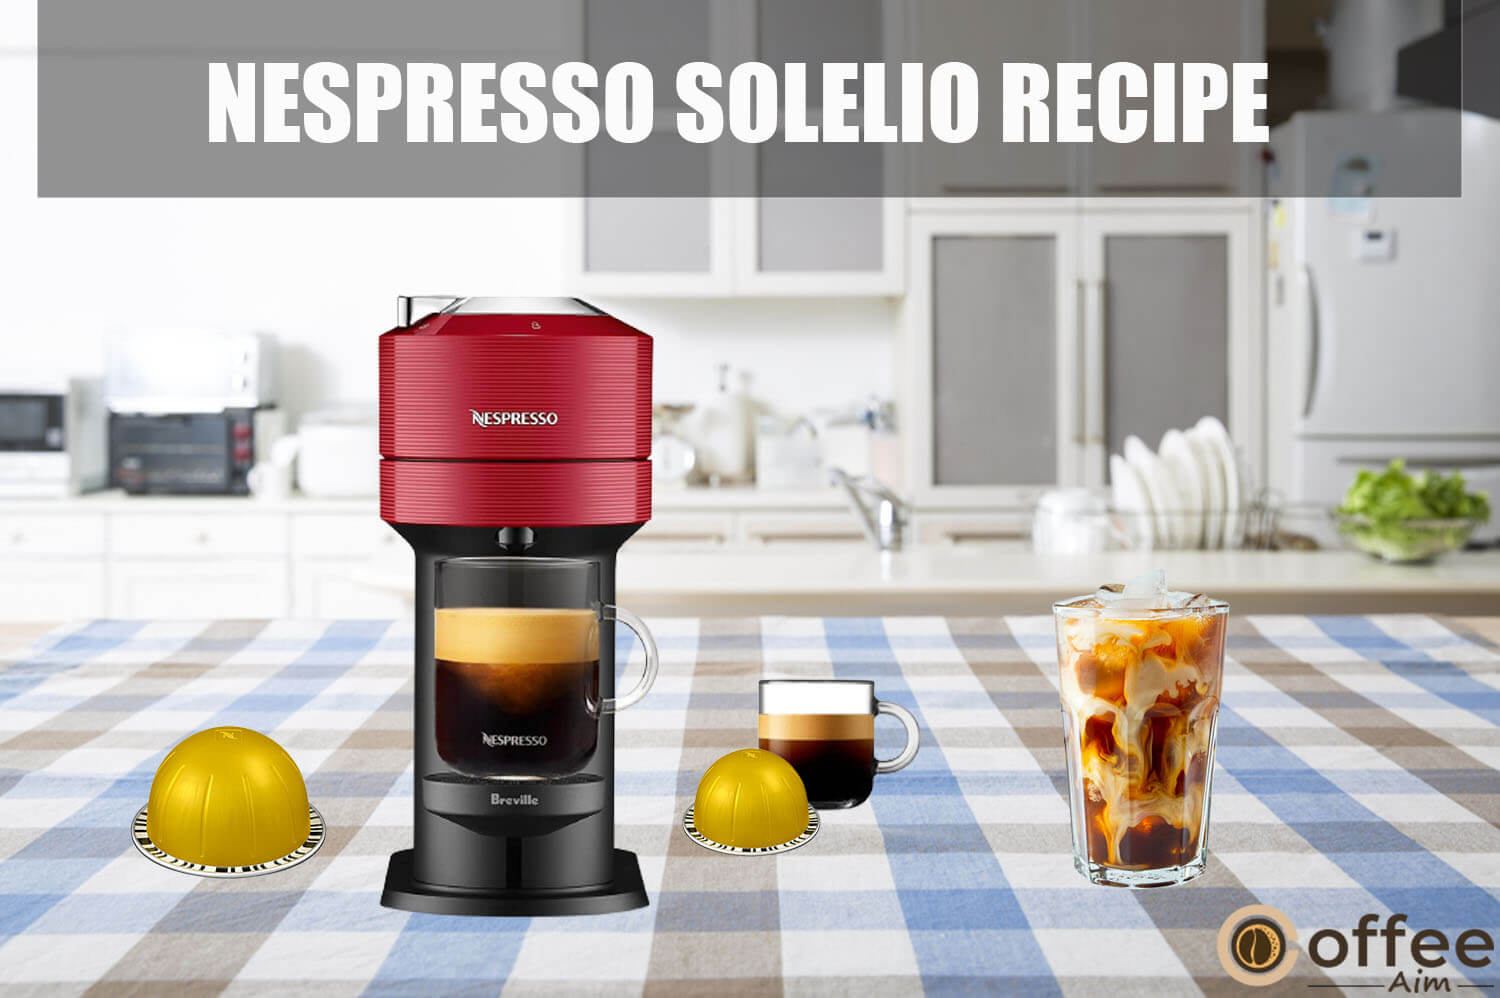 Featured image for the article "Nespresso Solelio Recipe"